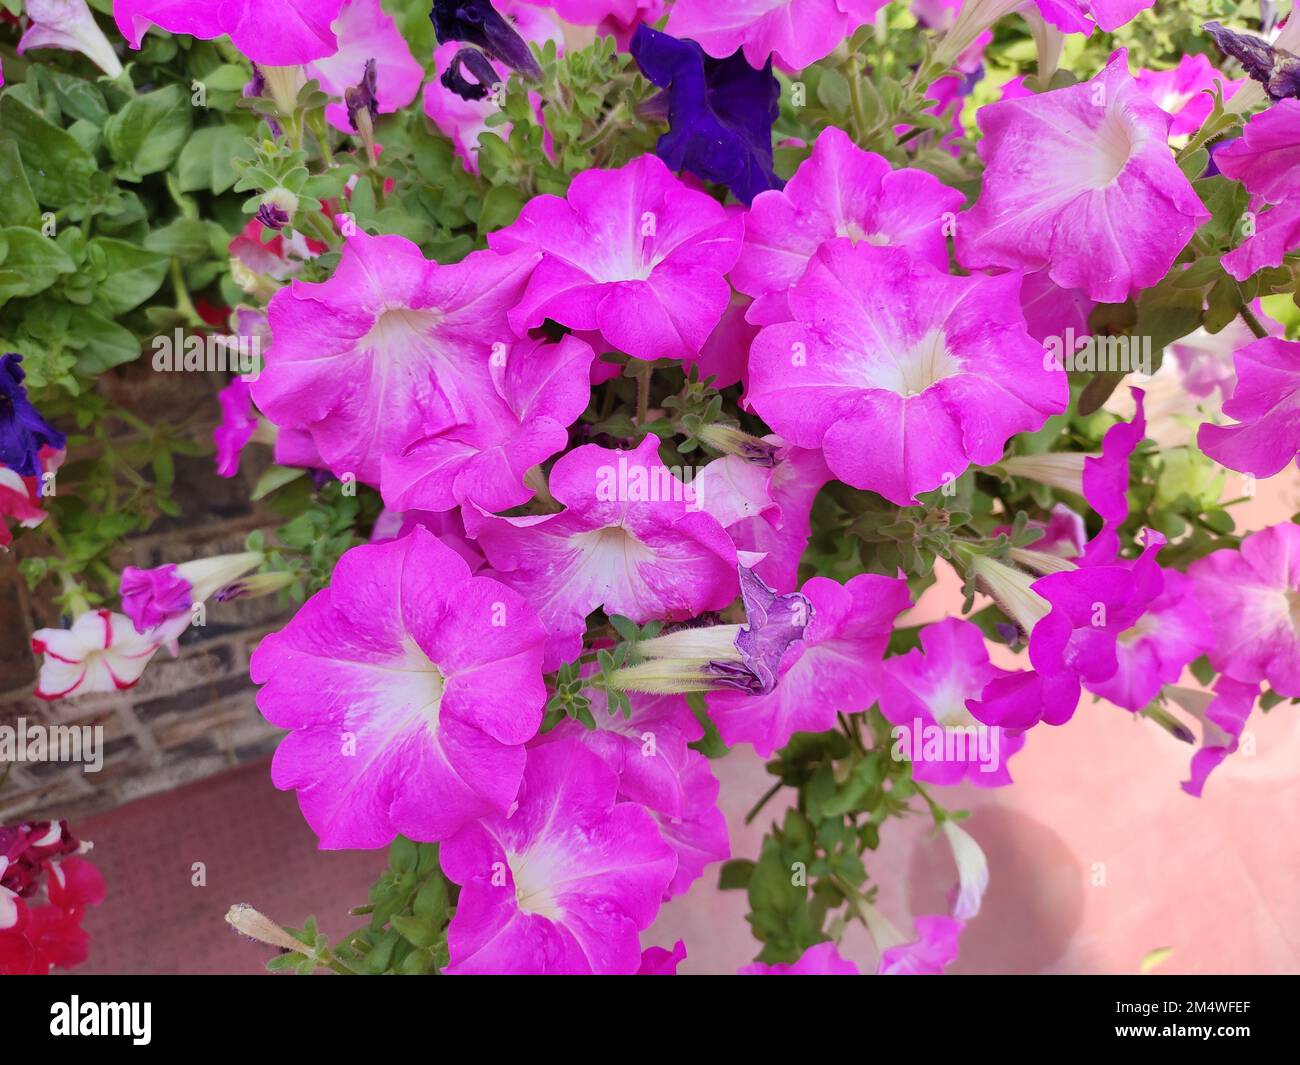 Garden flowering plant - Petunia. Color - pink Stock Photo